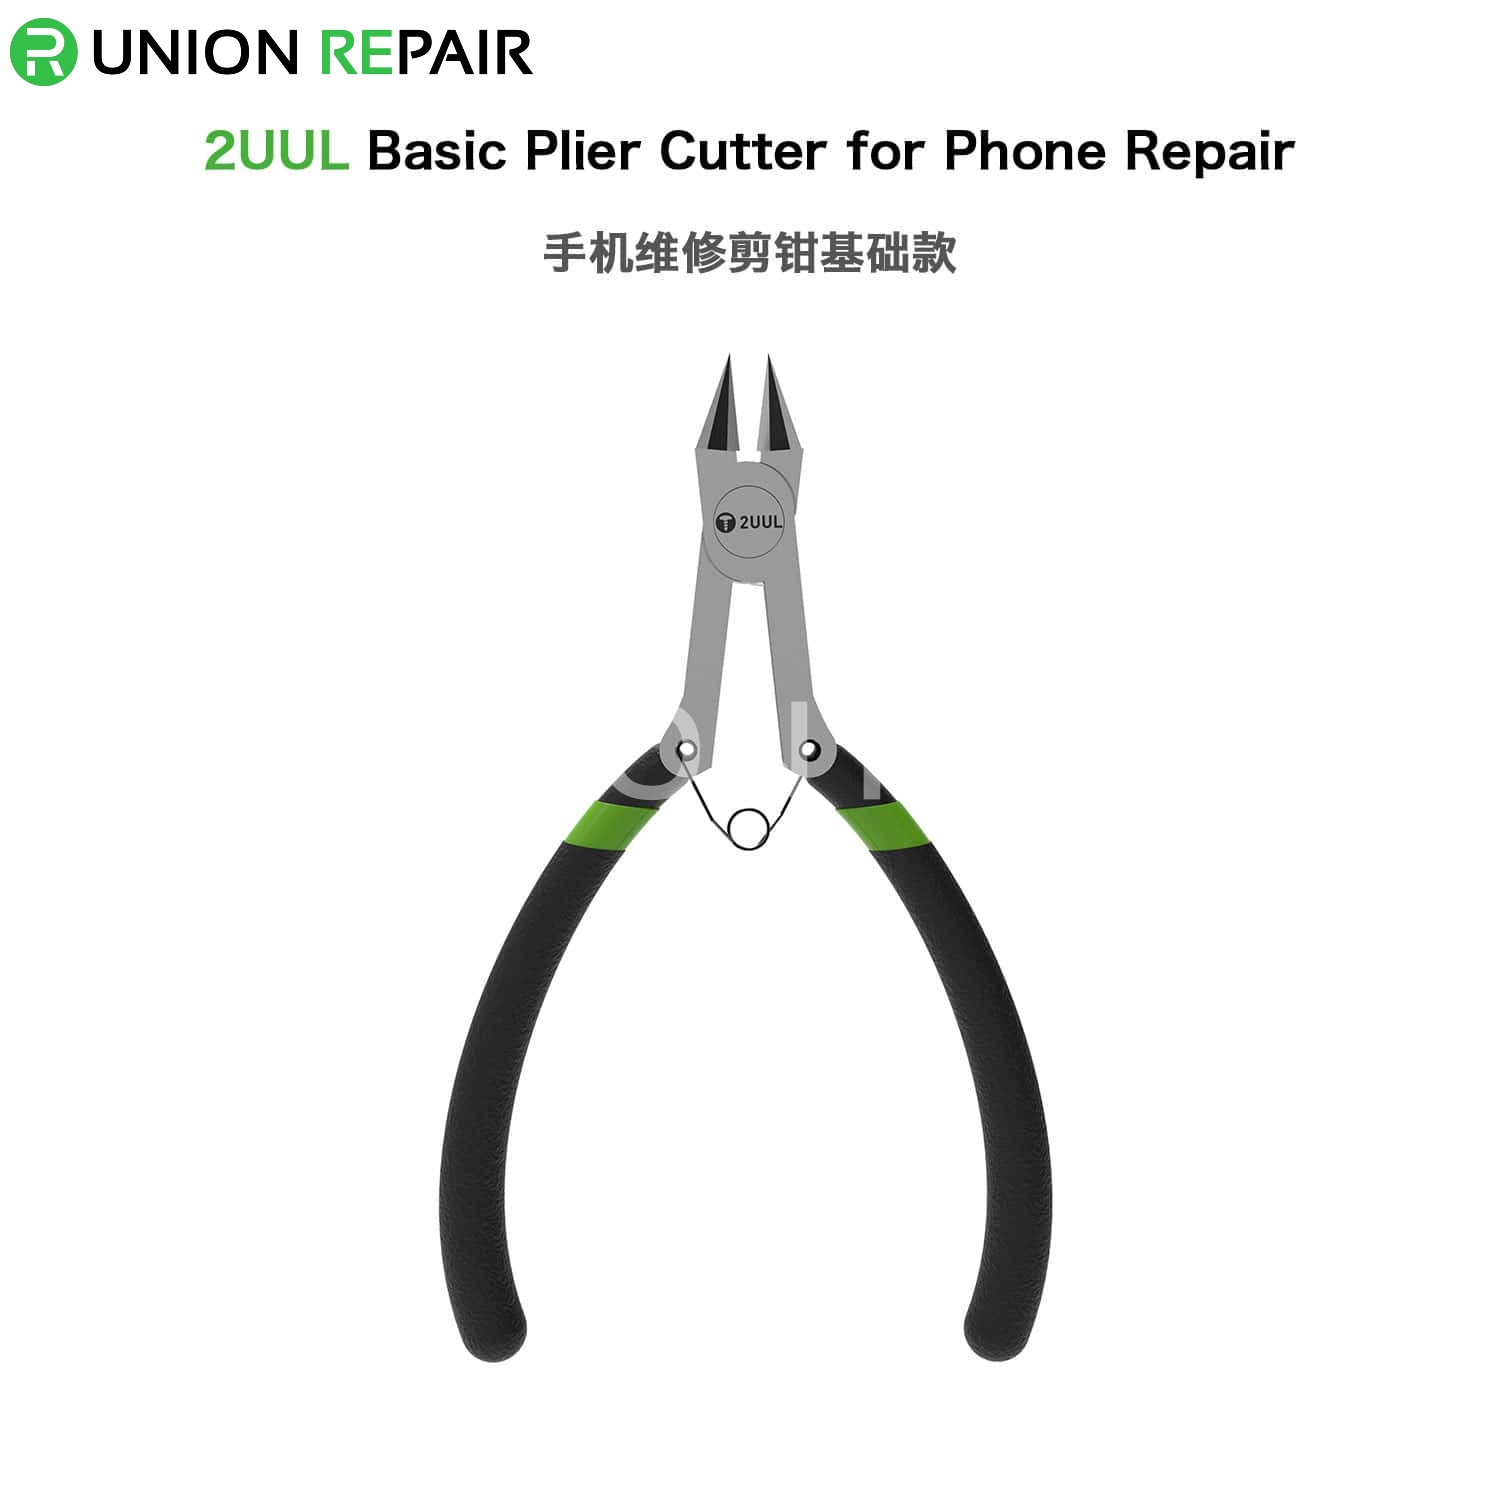 2UUL Basic Plier Cutter for Phone Repair